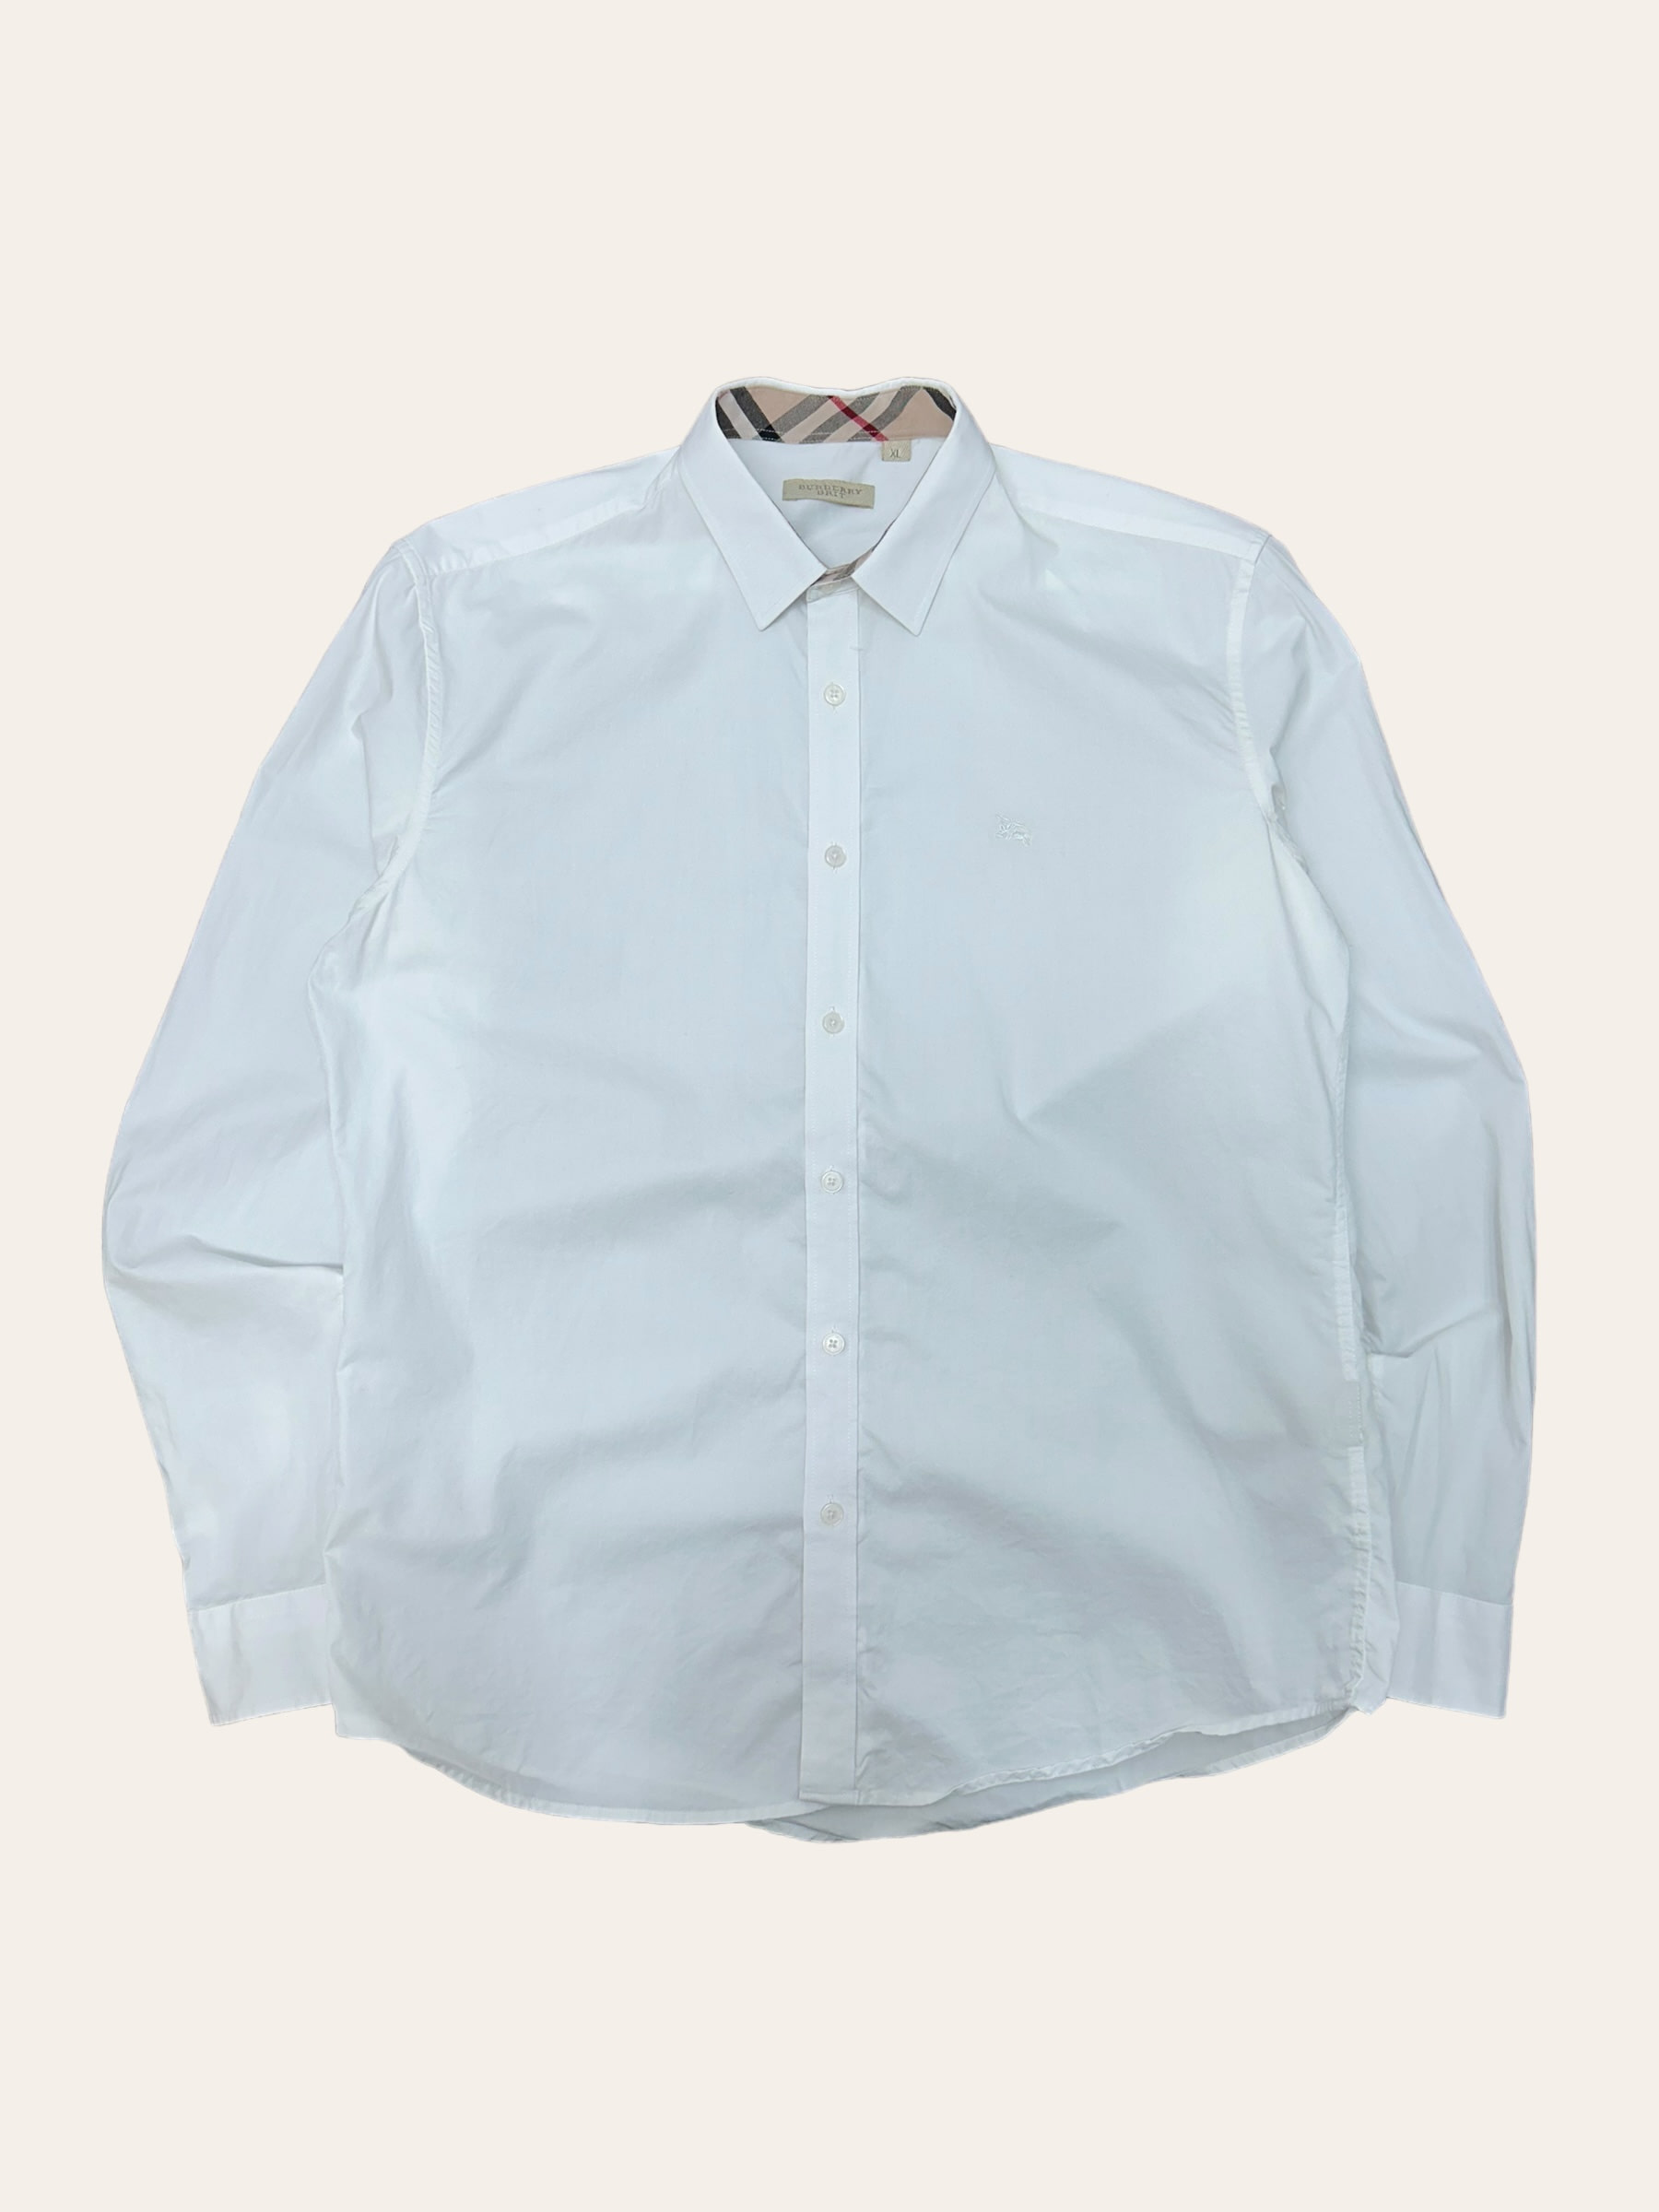 Burberry white brit poplin shirt XL